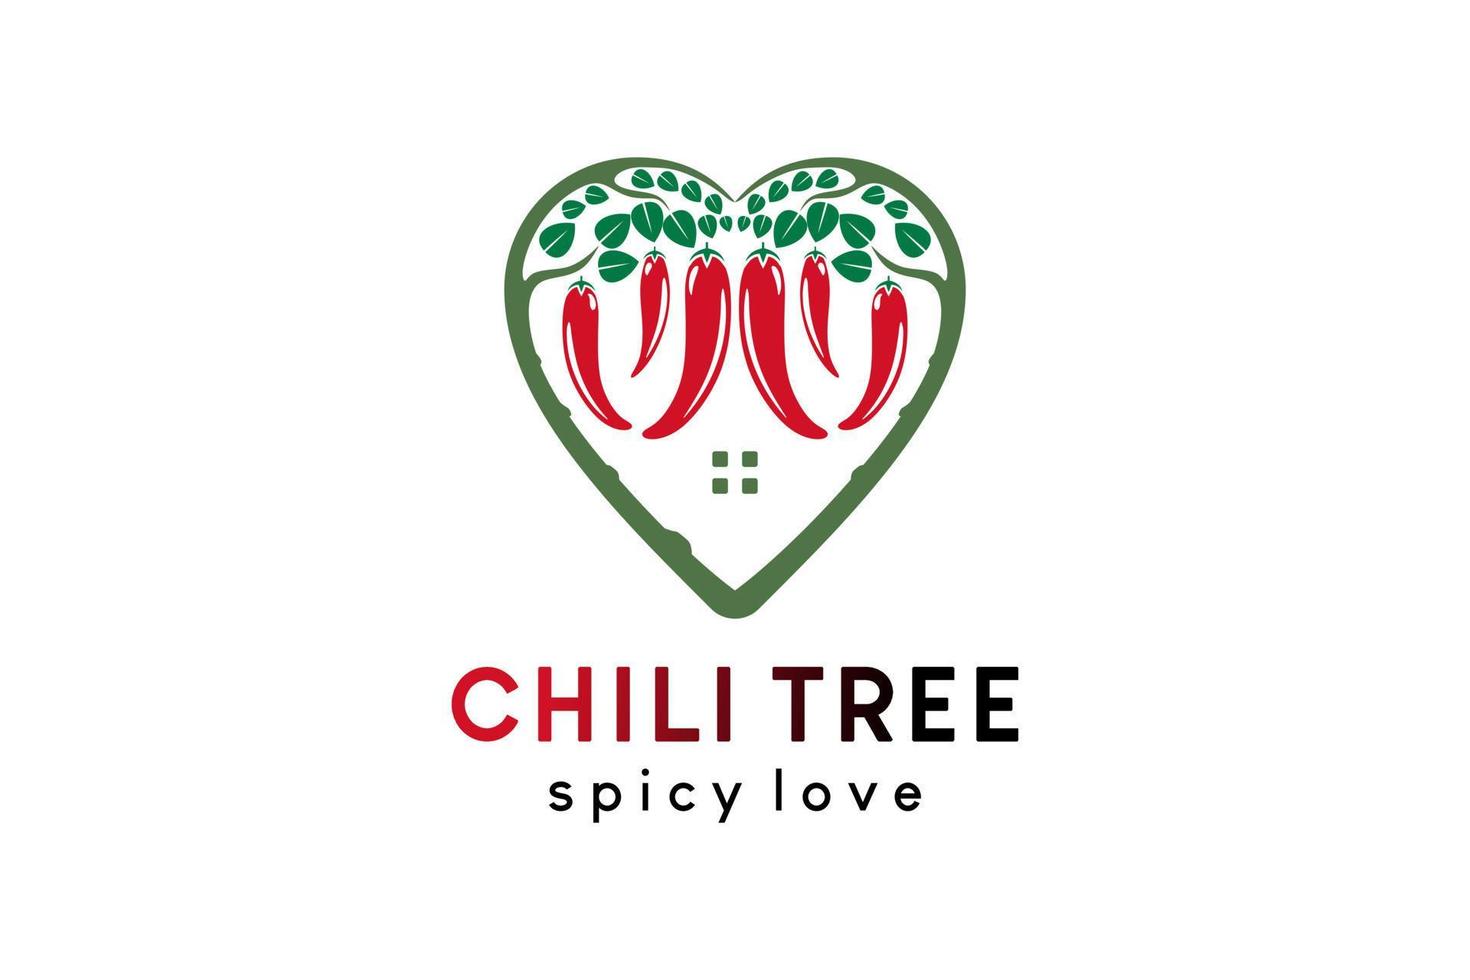 Chili tree vector illustration logo design with creative love concept